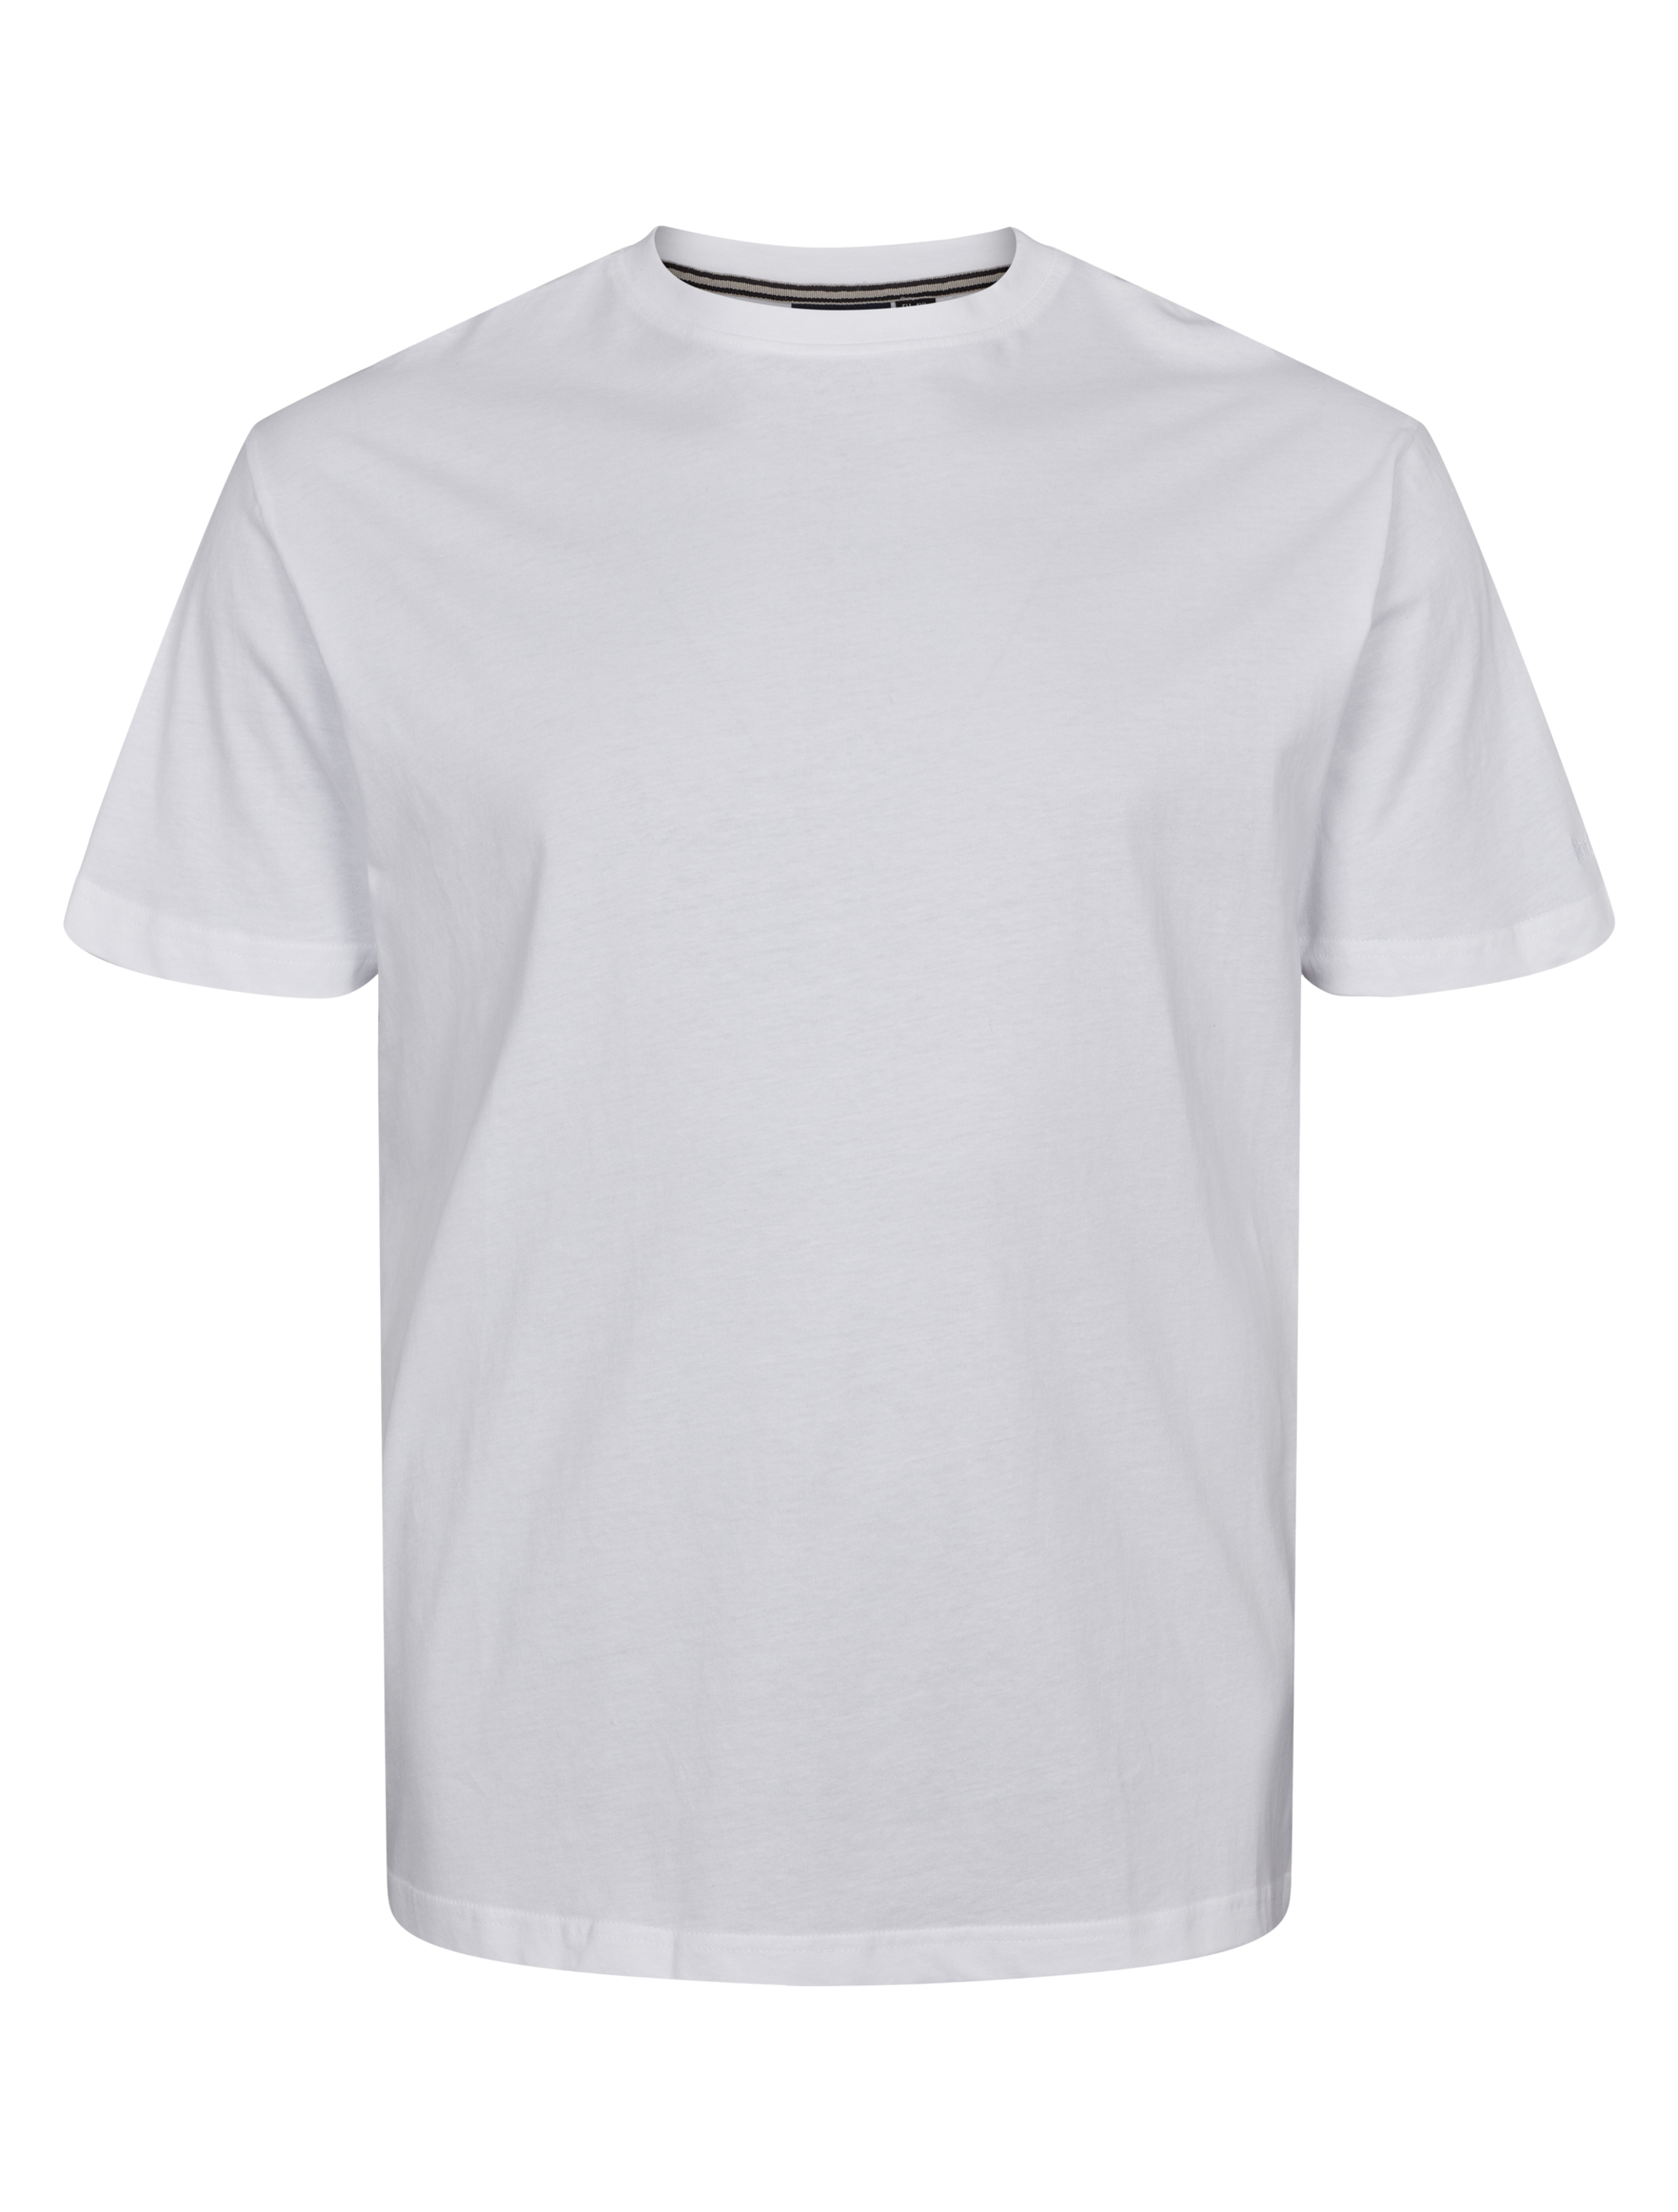 North T-shirt hvid / 000 hvid